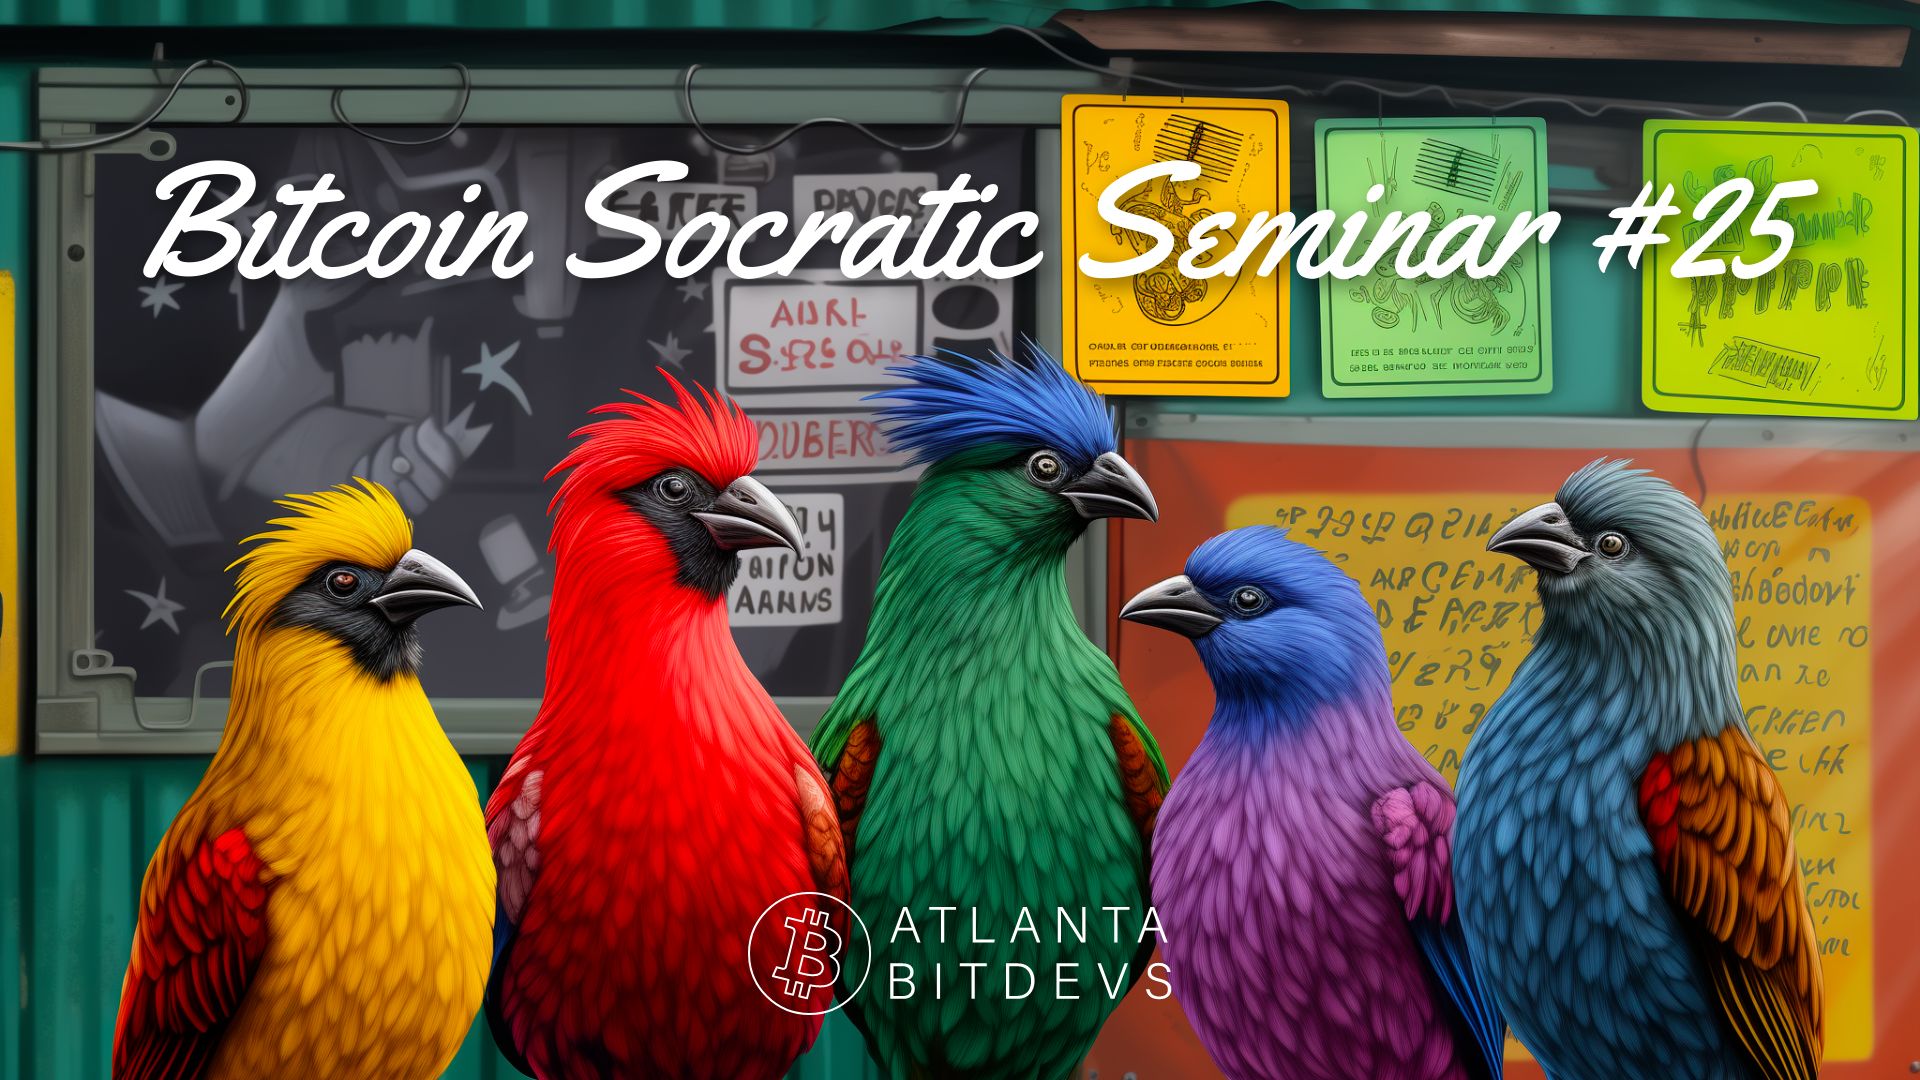 Bitcoin Socratic Seminar #25